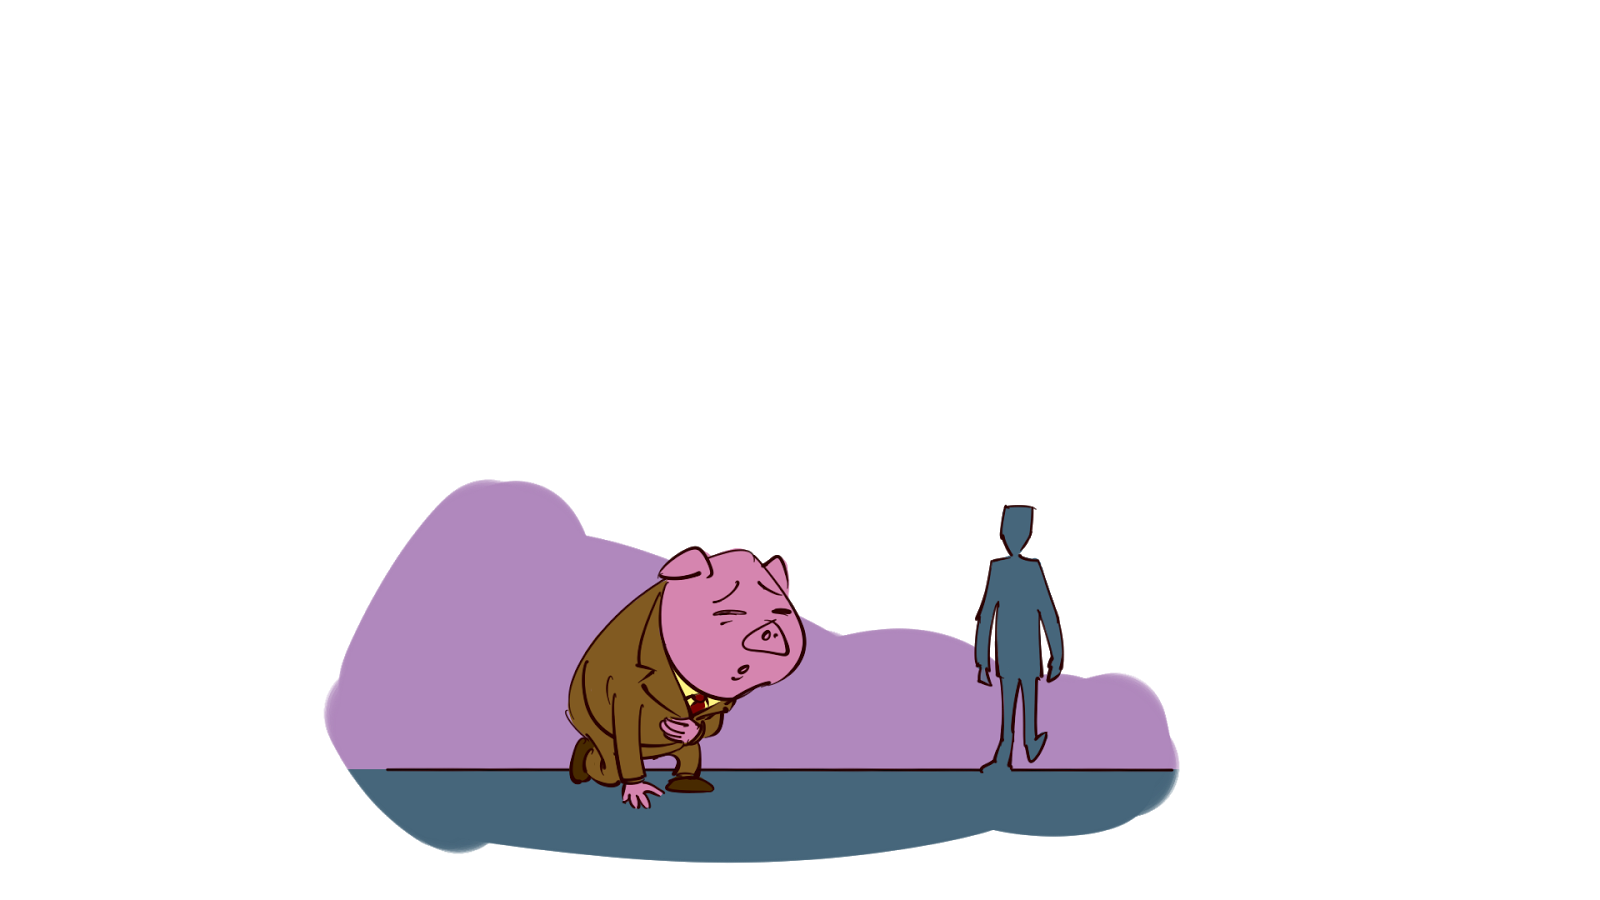 children's tv app cartoon pig hurt and stranger illustration